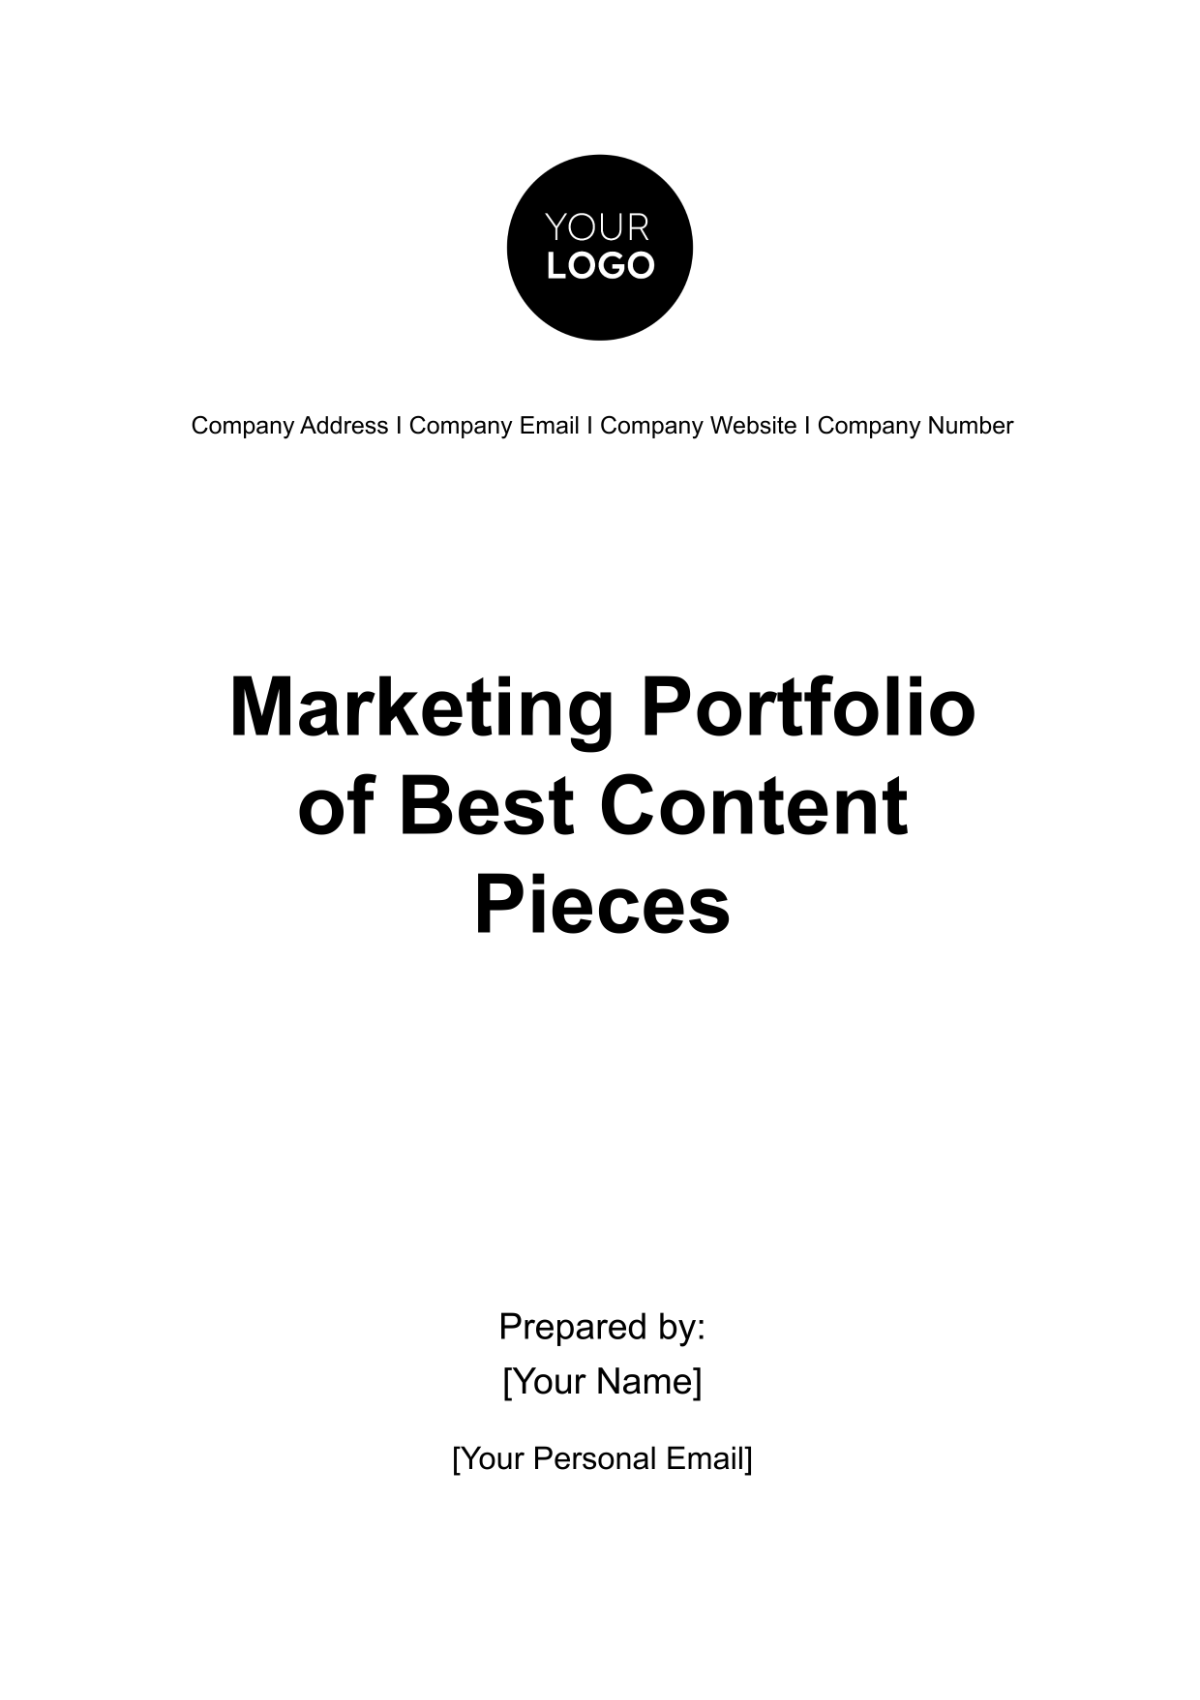 Marketing Portfolio of Best Content Pieces Template